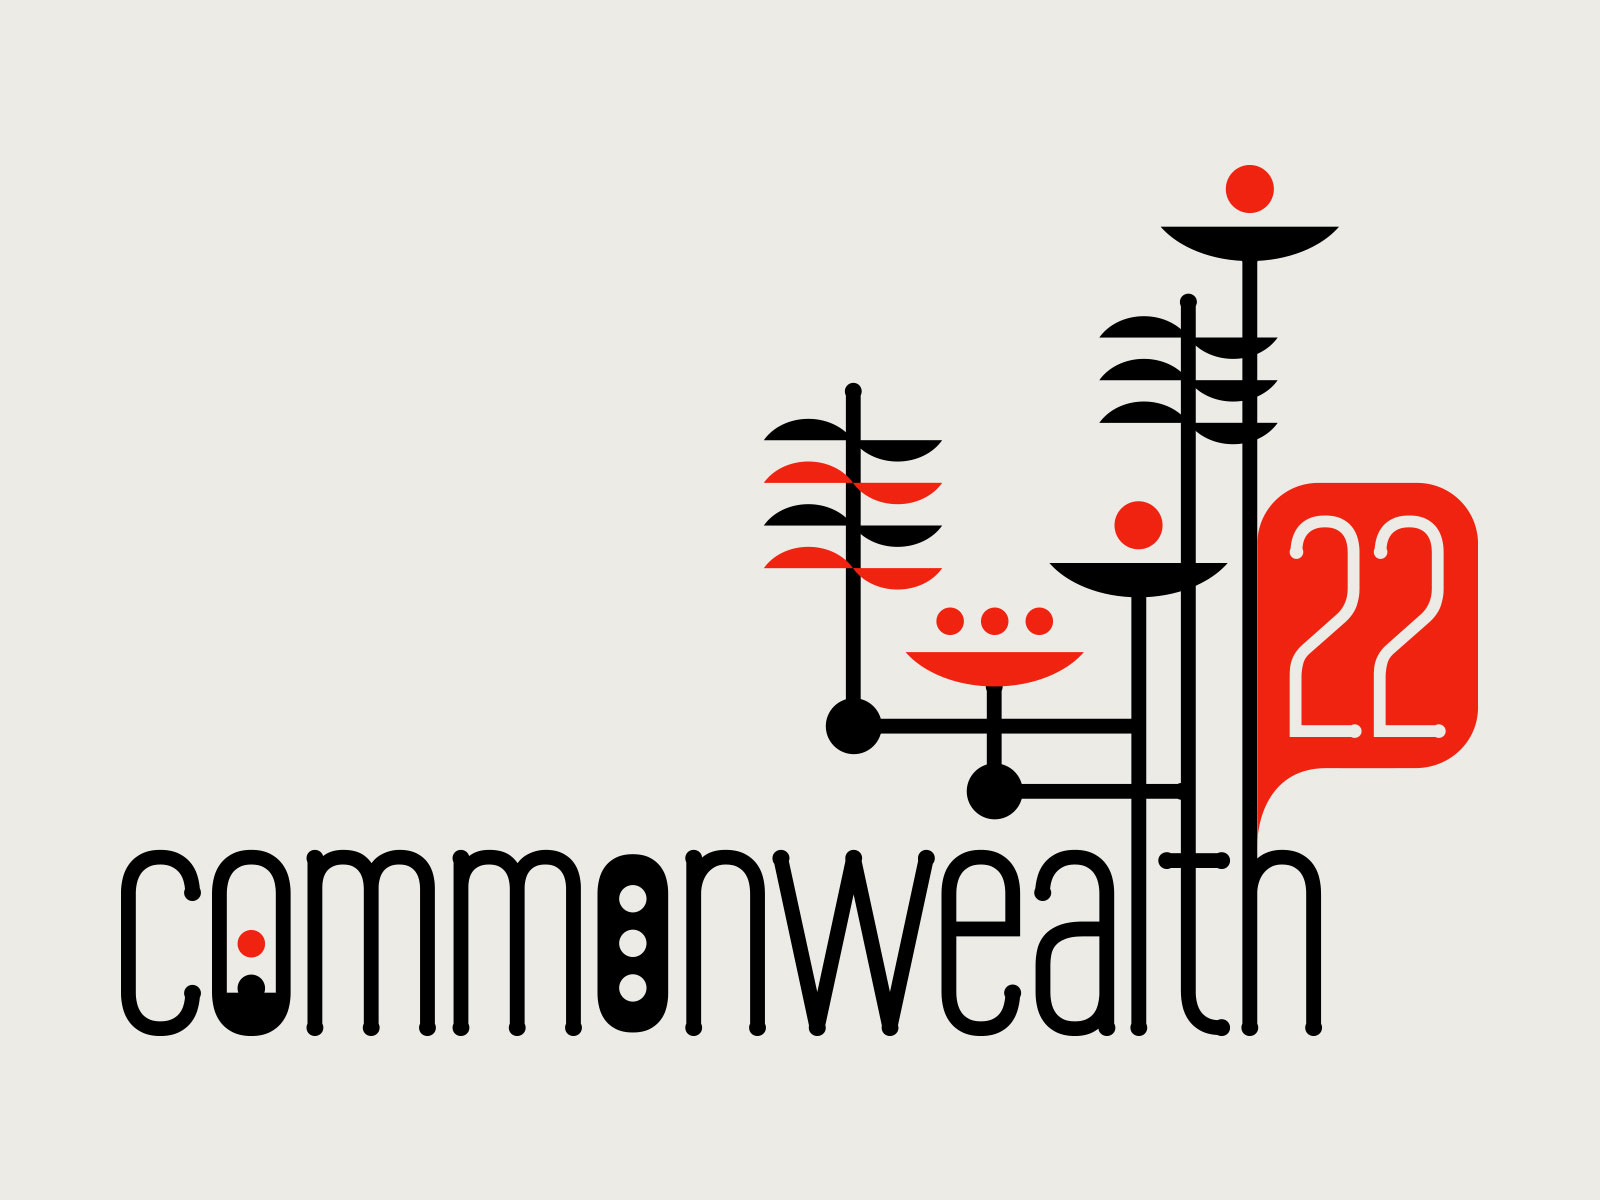 Commonwealth'22 Summit - Concept Type